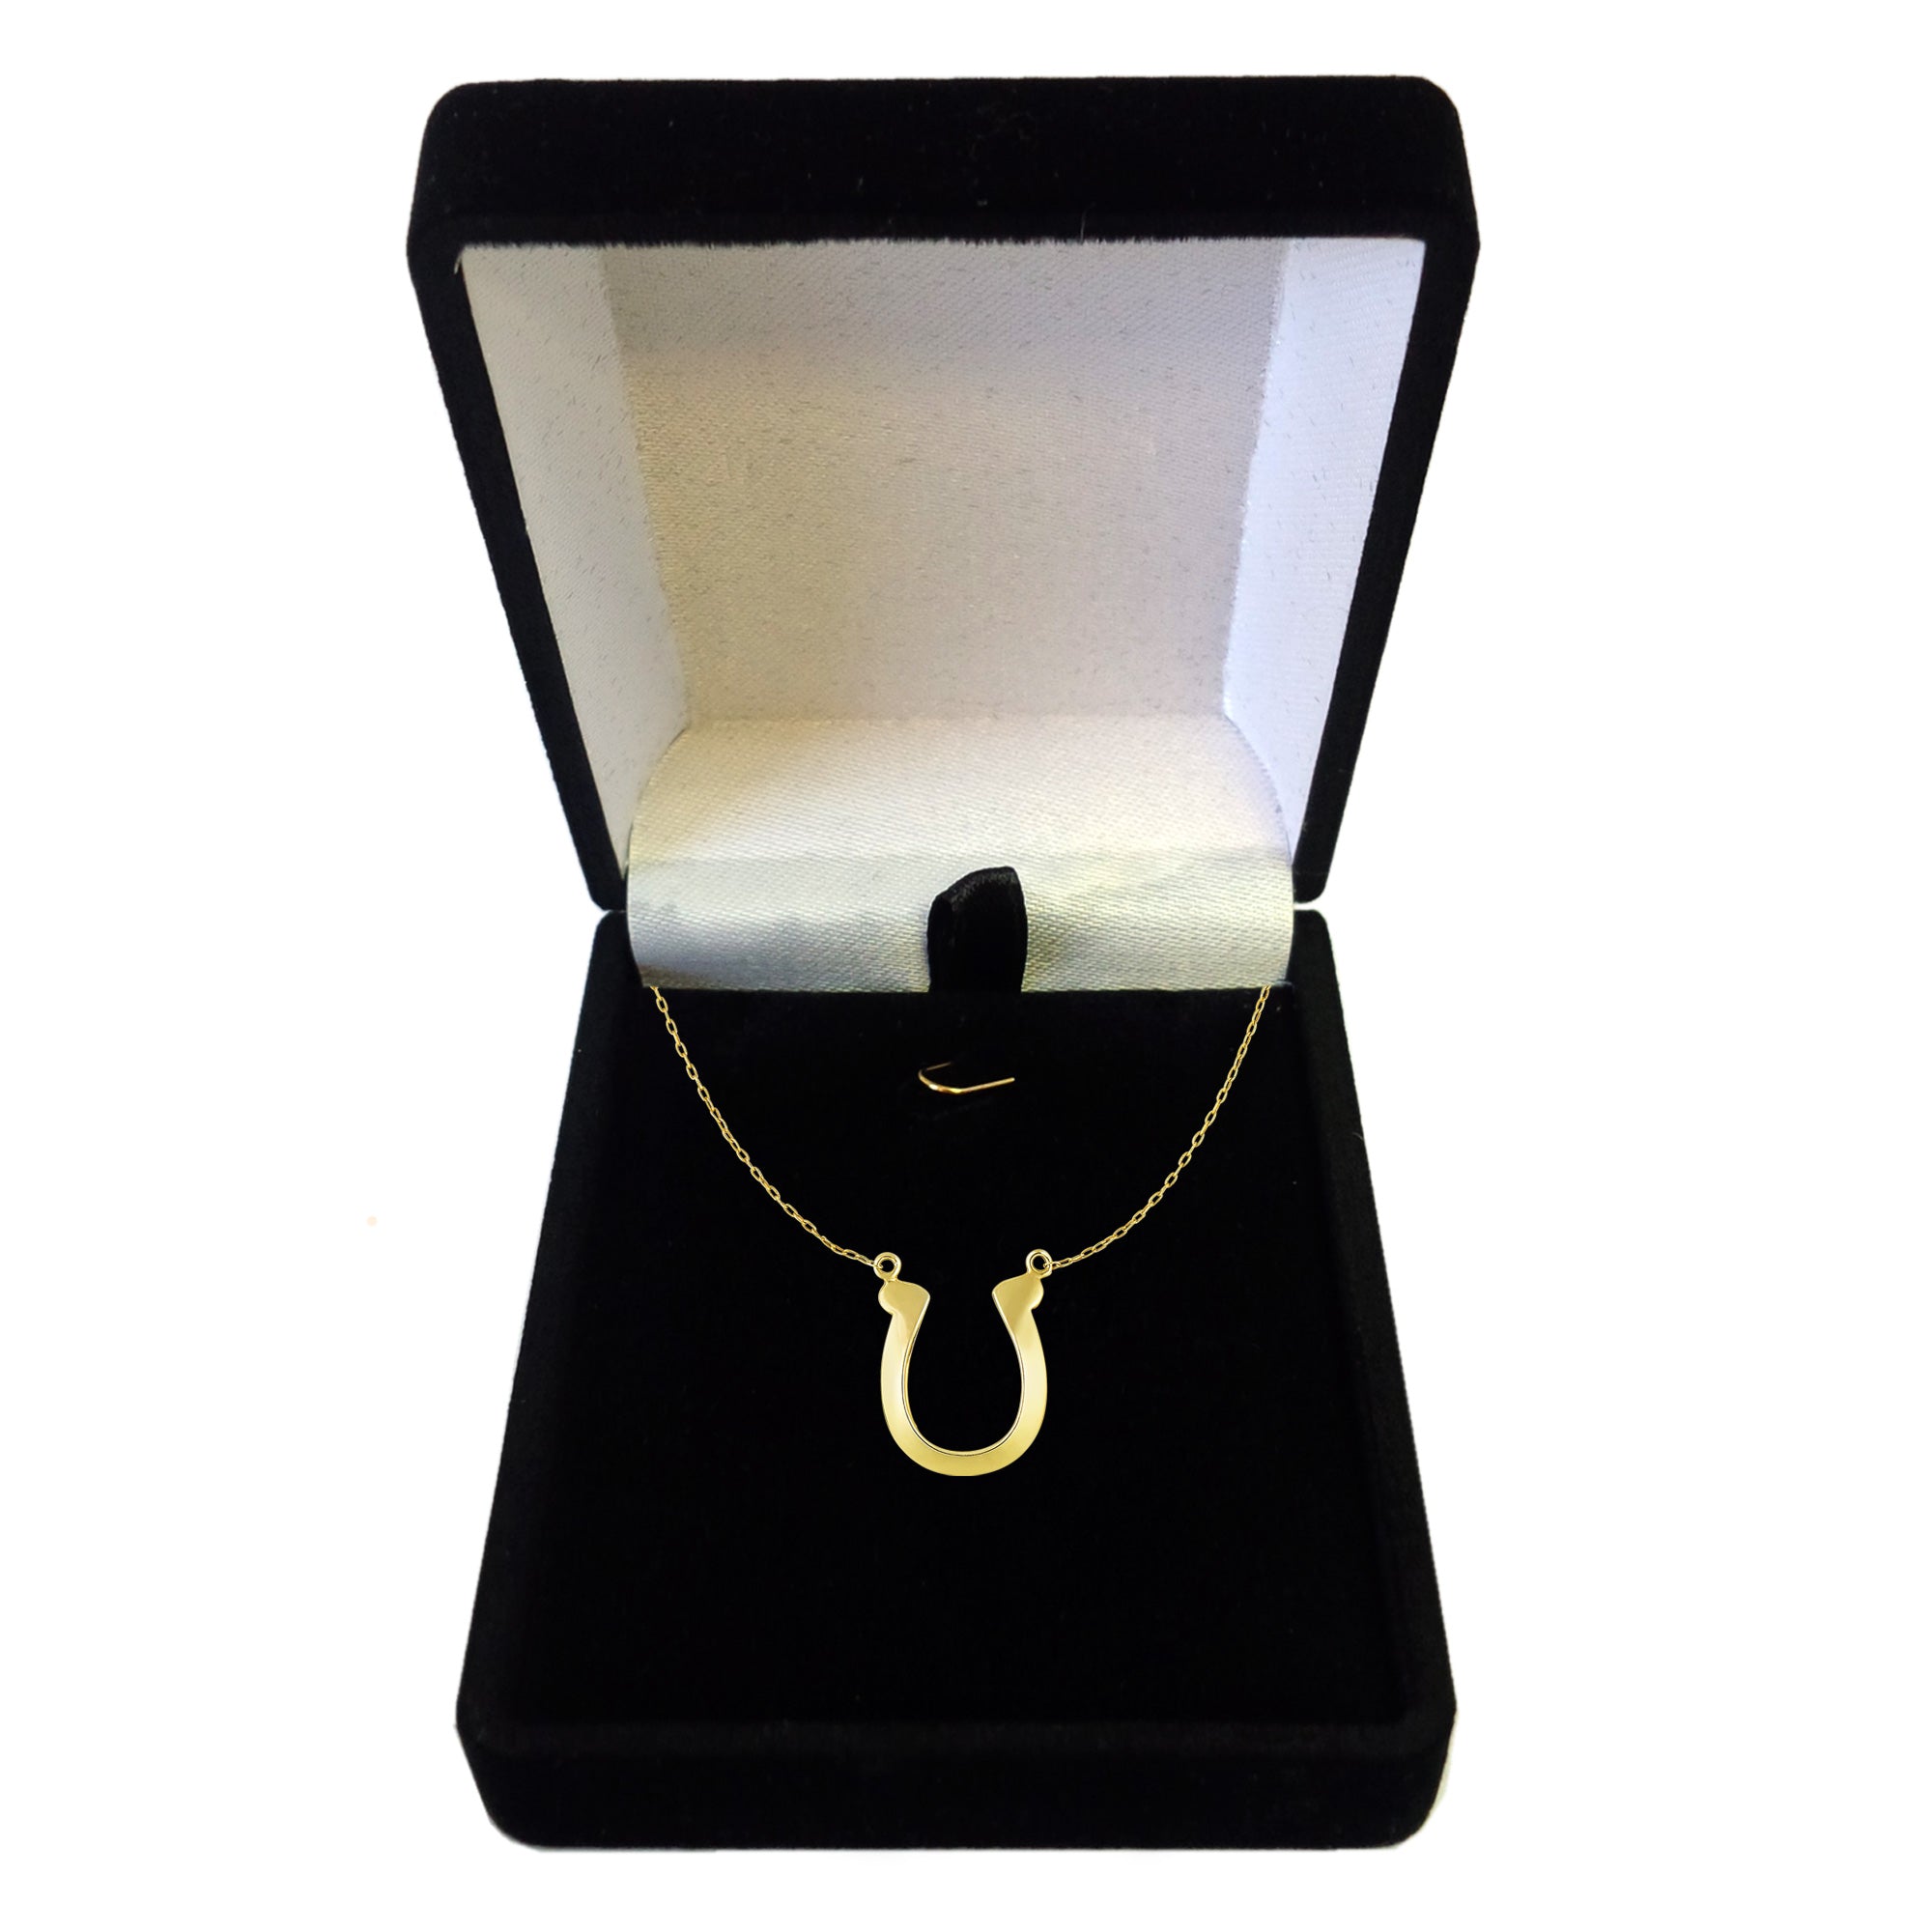 14k Yellow Gold Shiny Lucky Horse Shoe Pendant Necklace, 18"